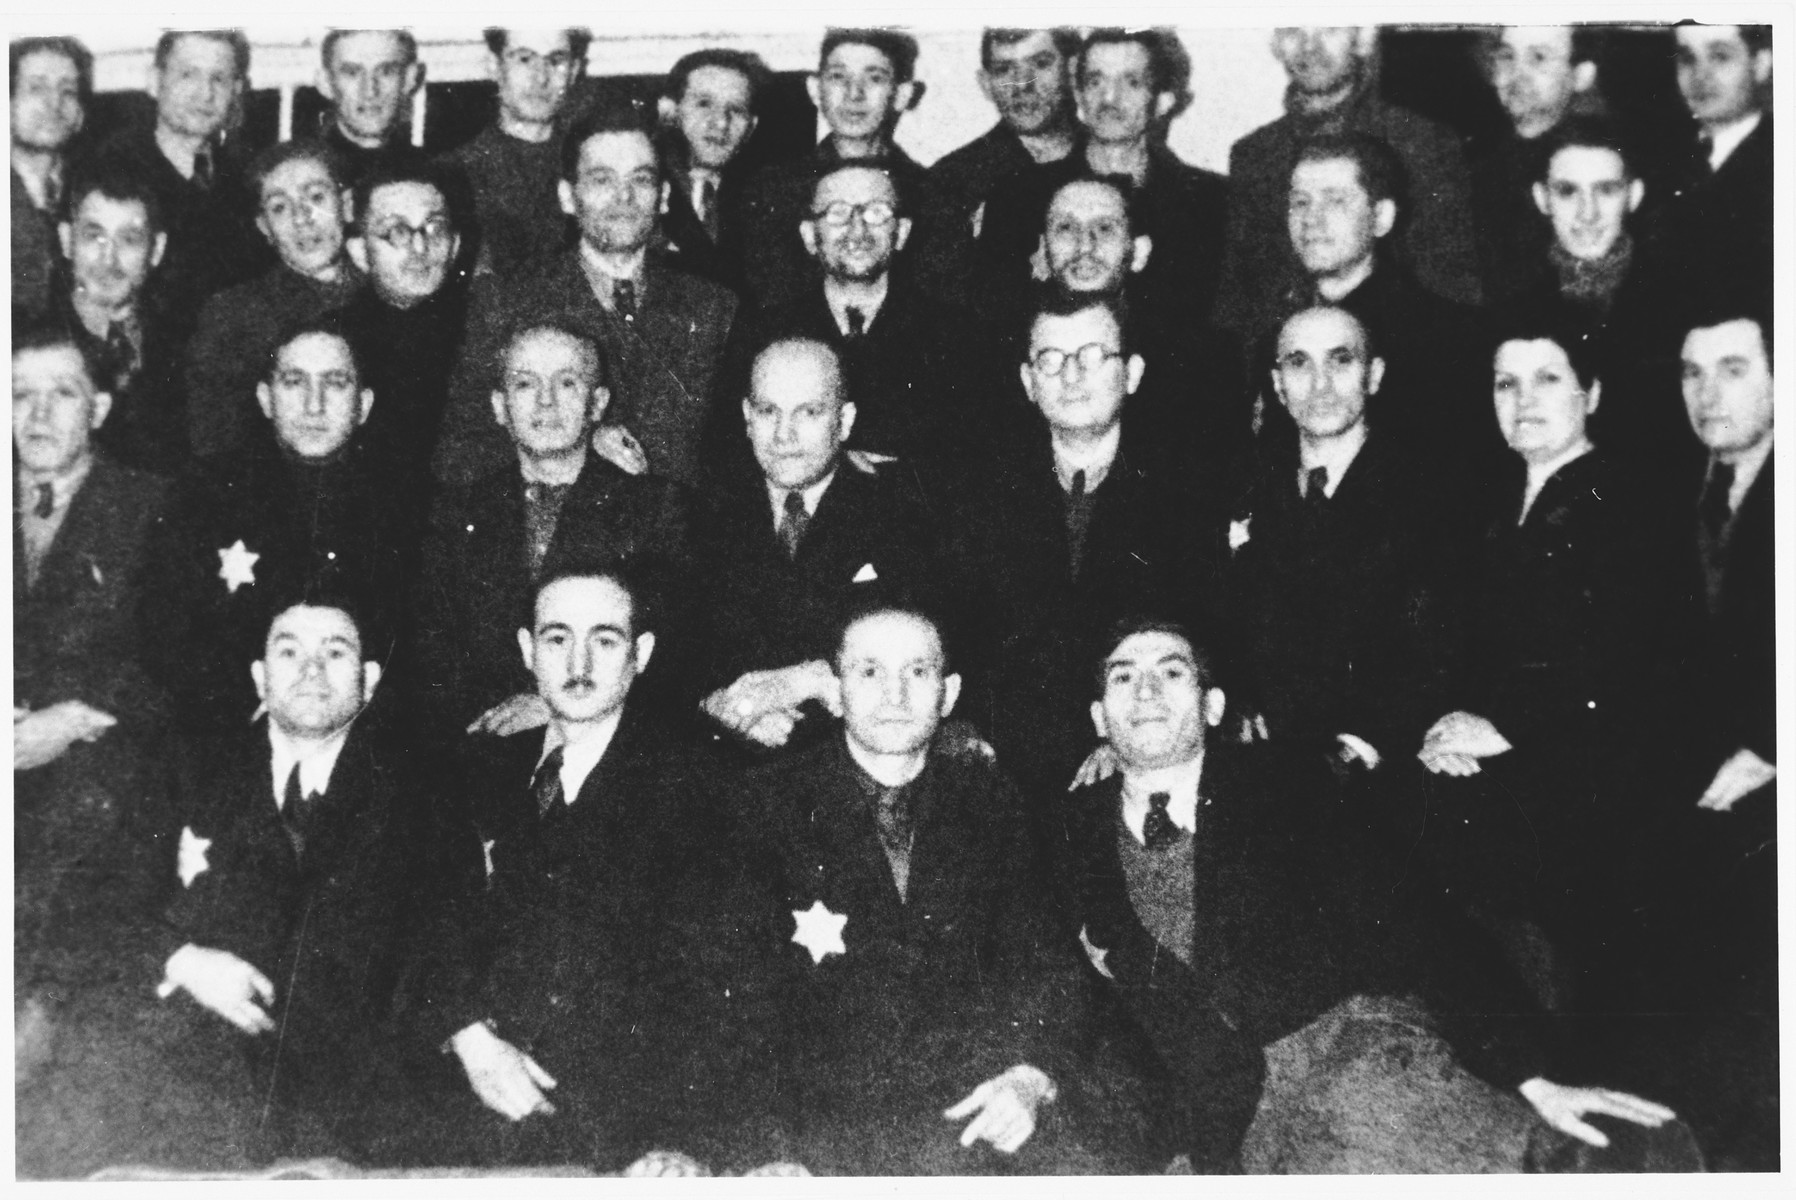 Group portrait of Jewish men in an unidentified ghetto wearing Jewish stars.